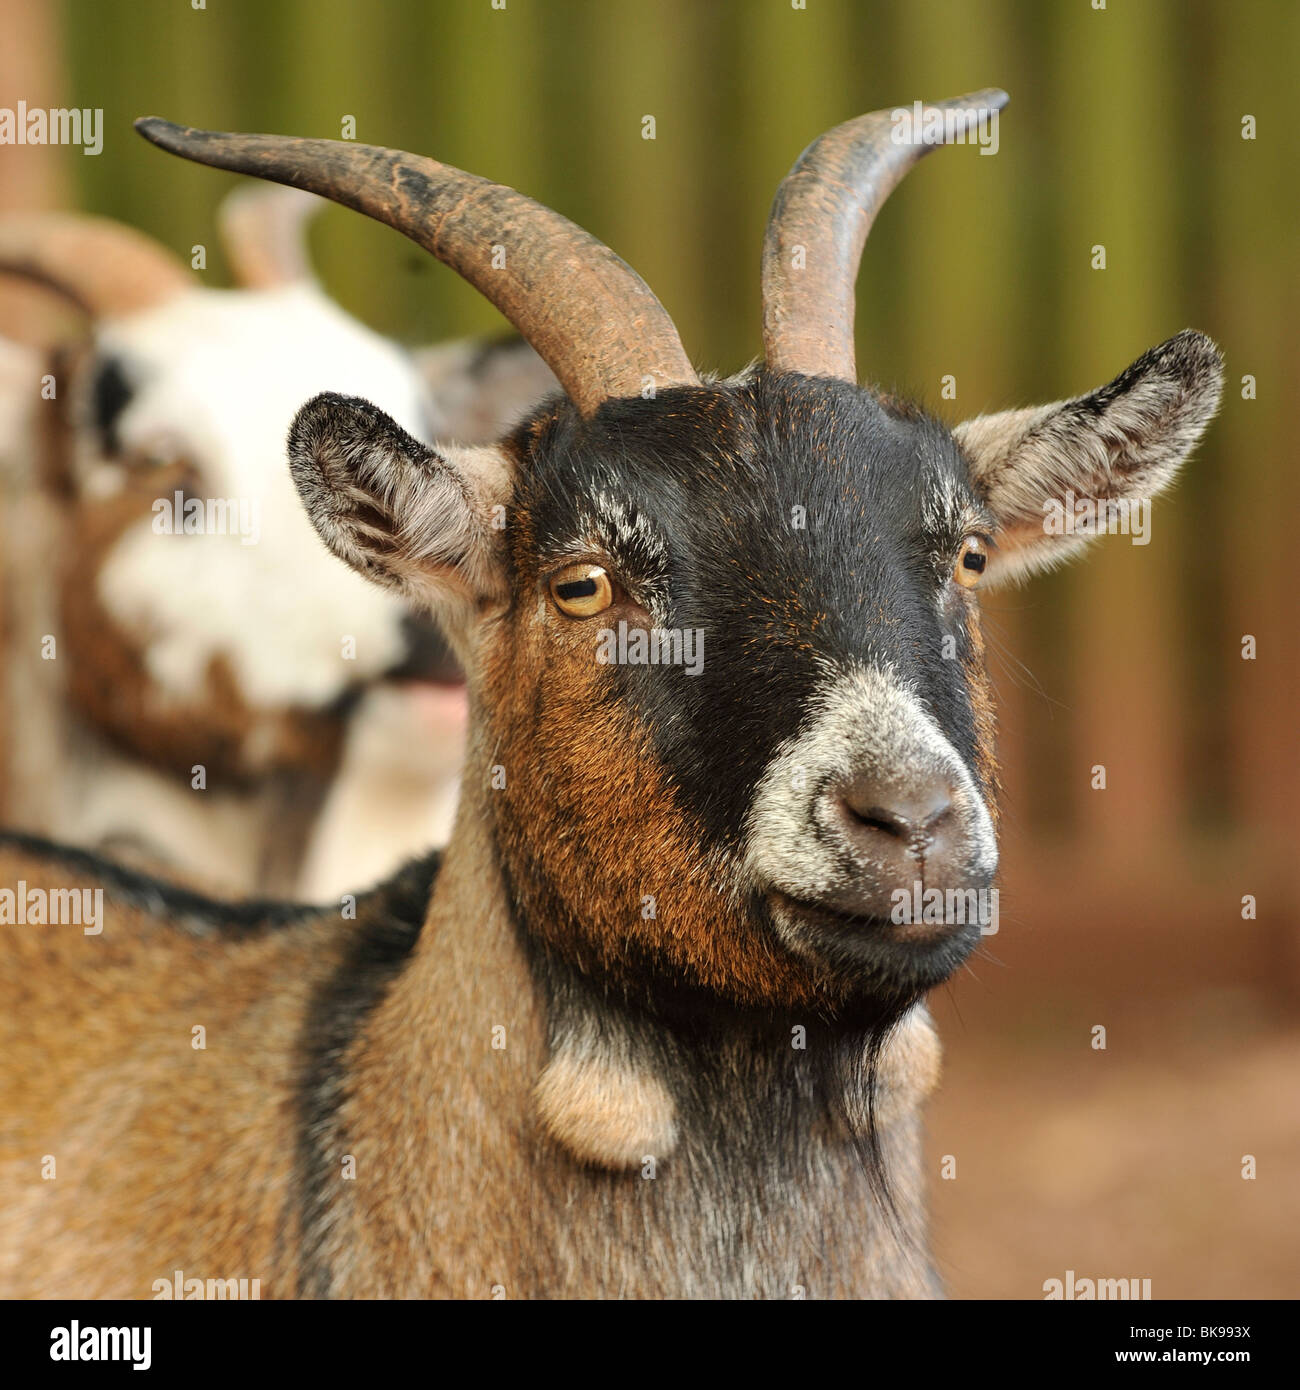 pygmy-goat-uk-stock-photo-alamy